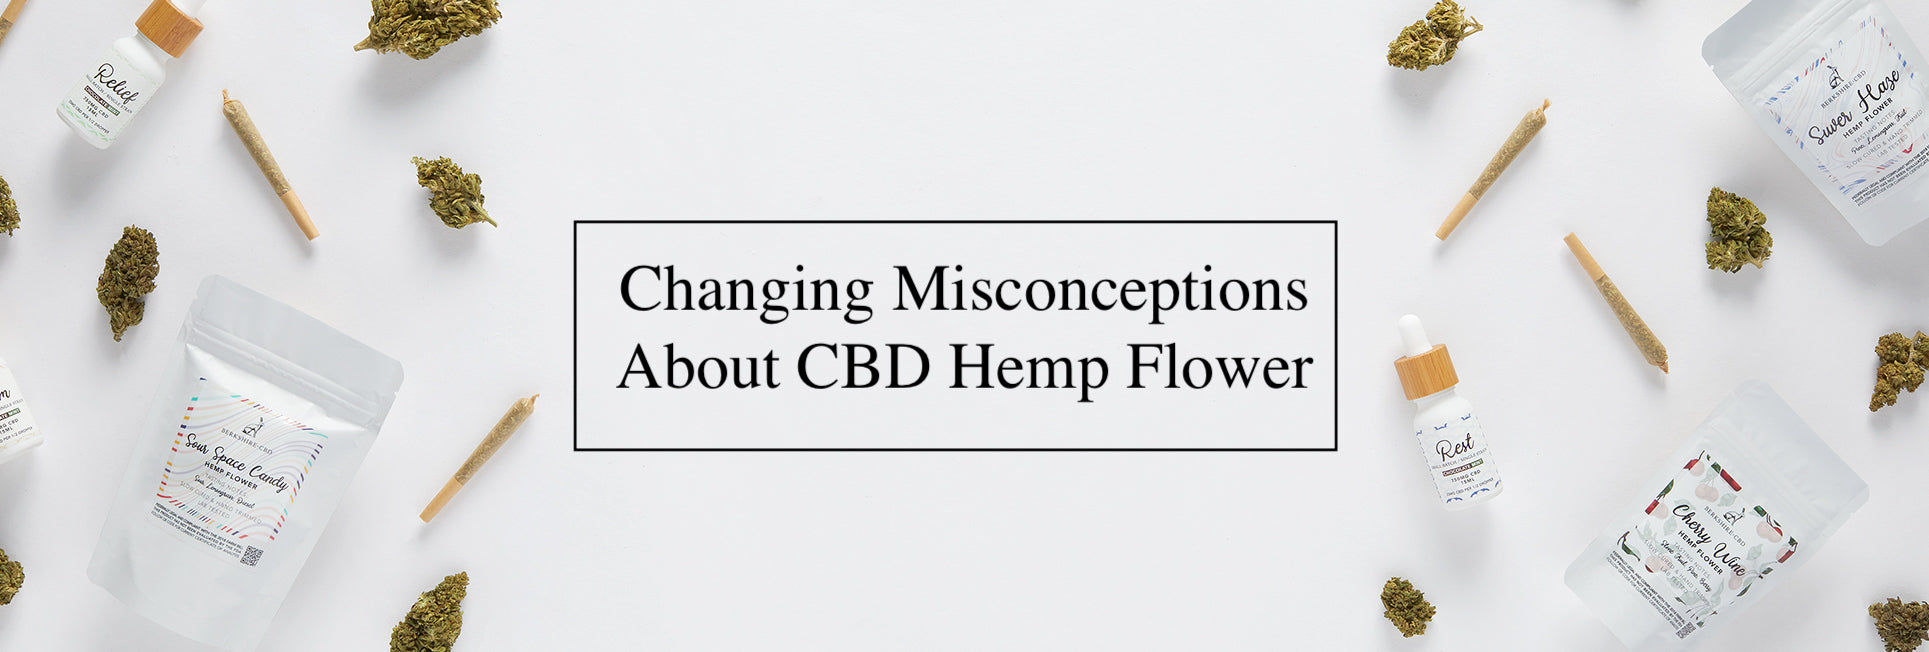 Changing Misconceptions About CBD Hemp Flower